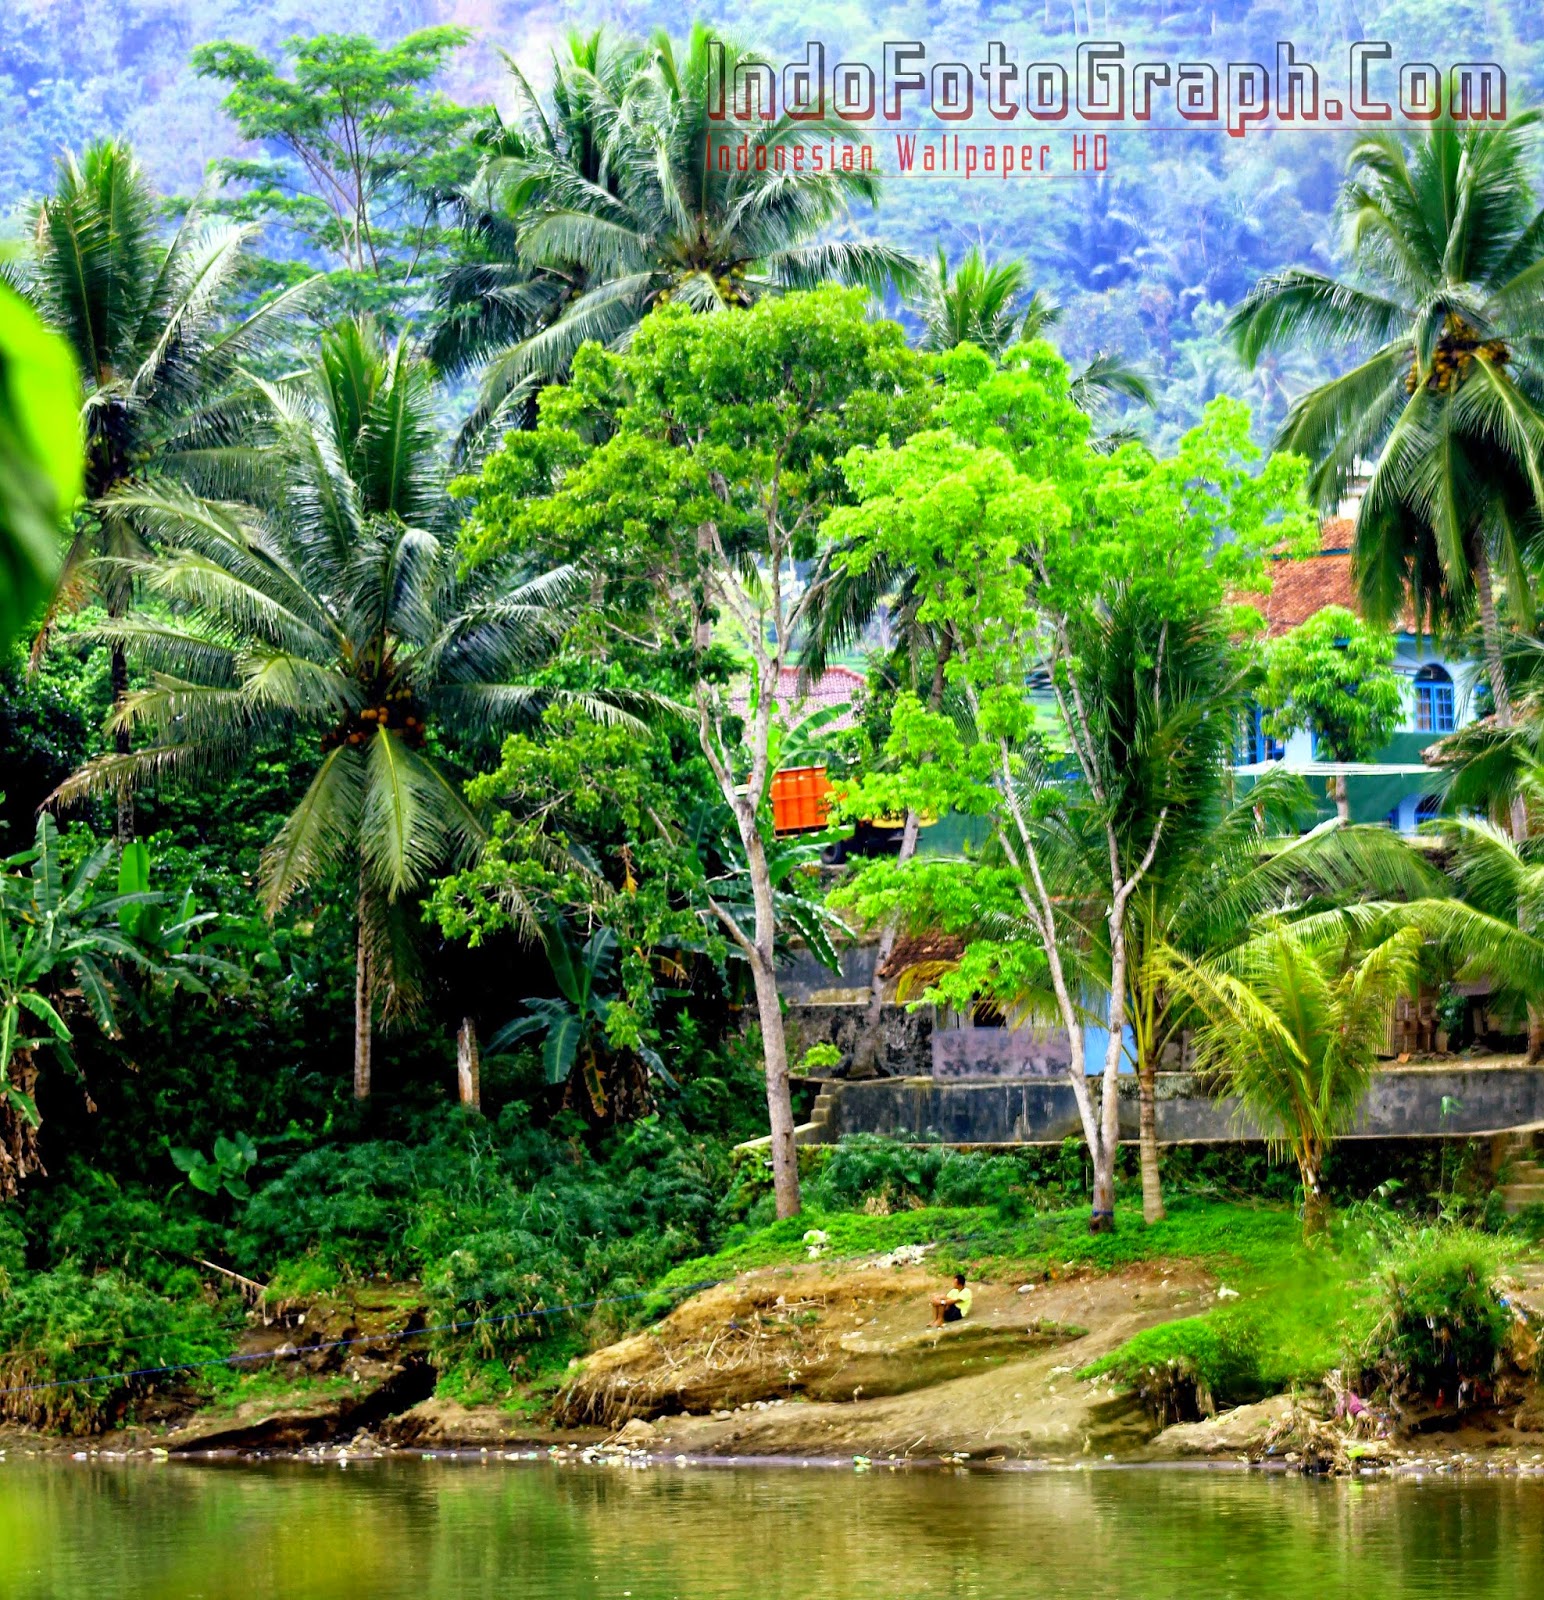 carta da parati pemandangan indah,paesaggio naturale,natura,albero,giungla,palma